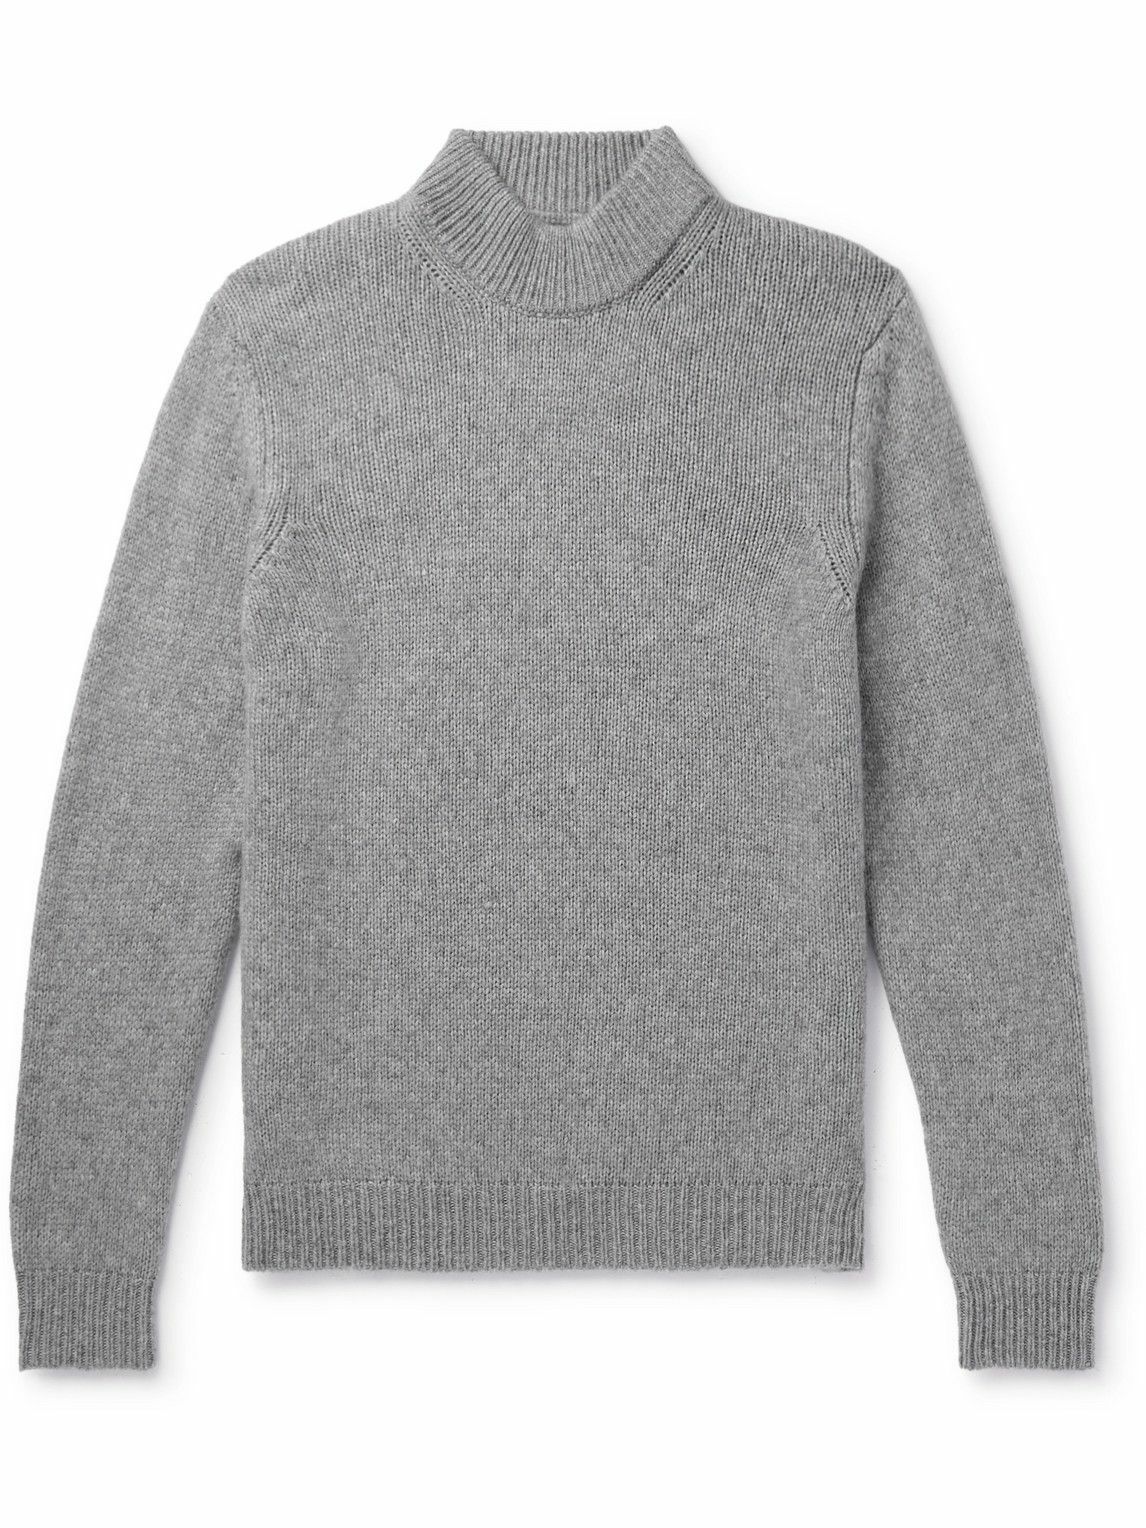 NN07 - Nick 6367 Merino Wool-Blend Rollneck Sweater - Gray NN07